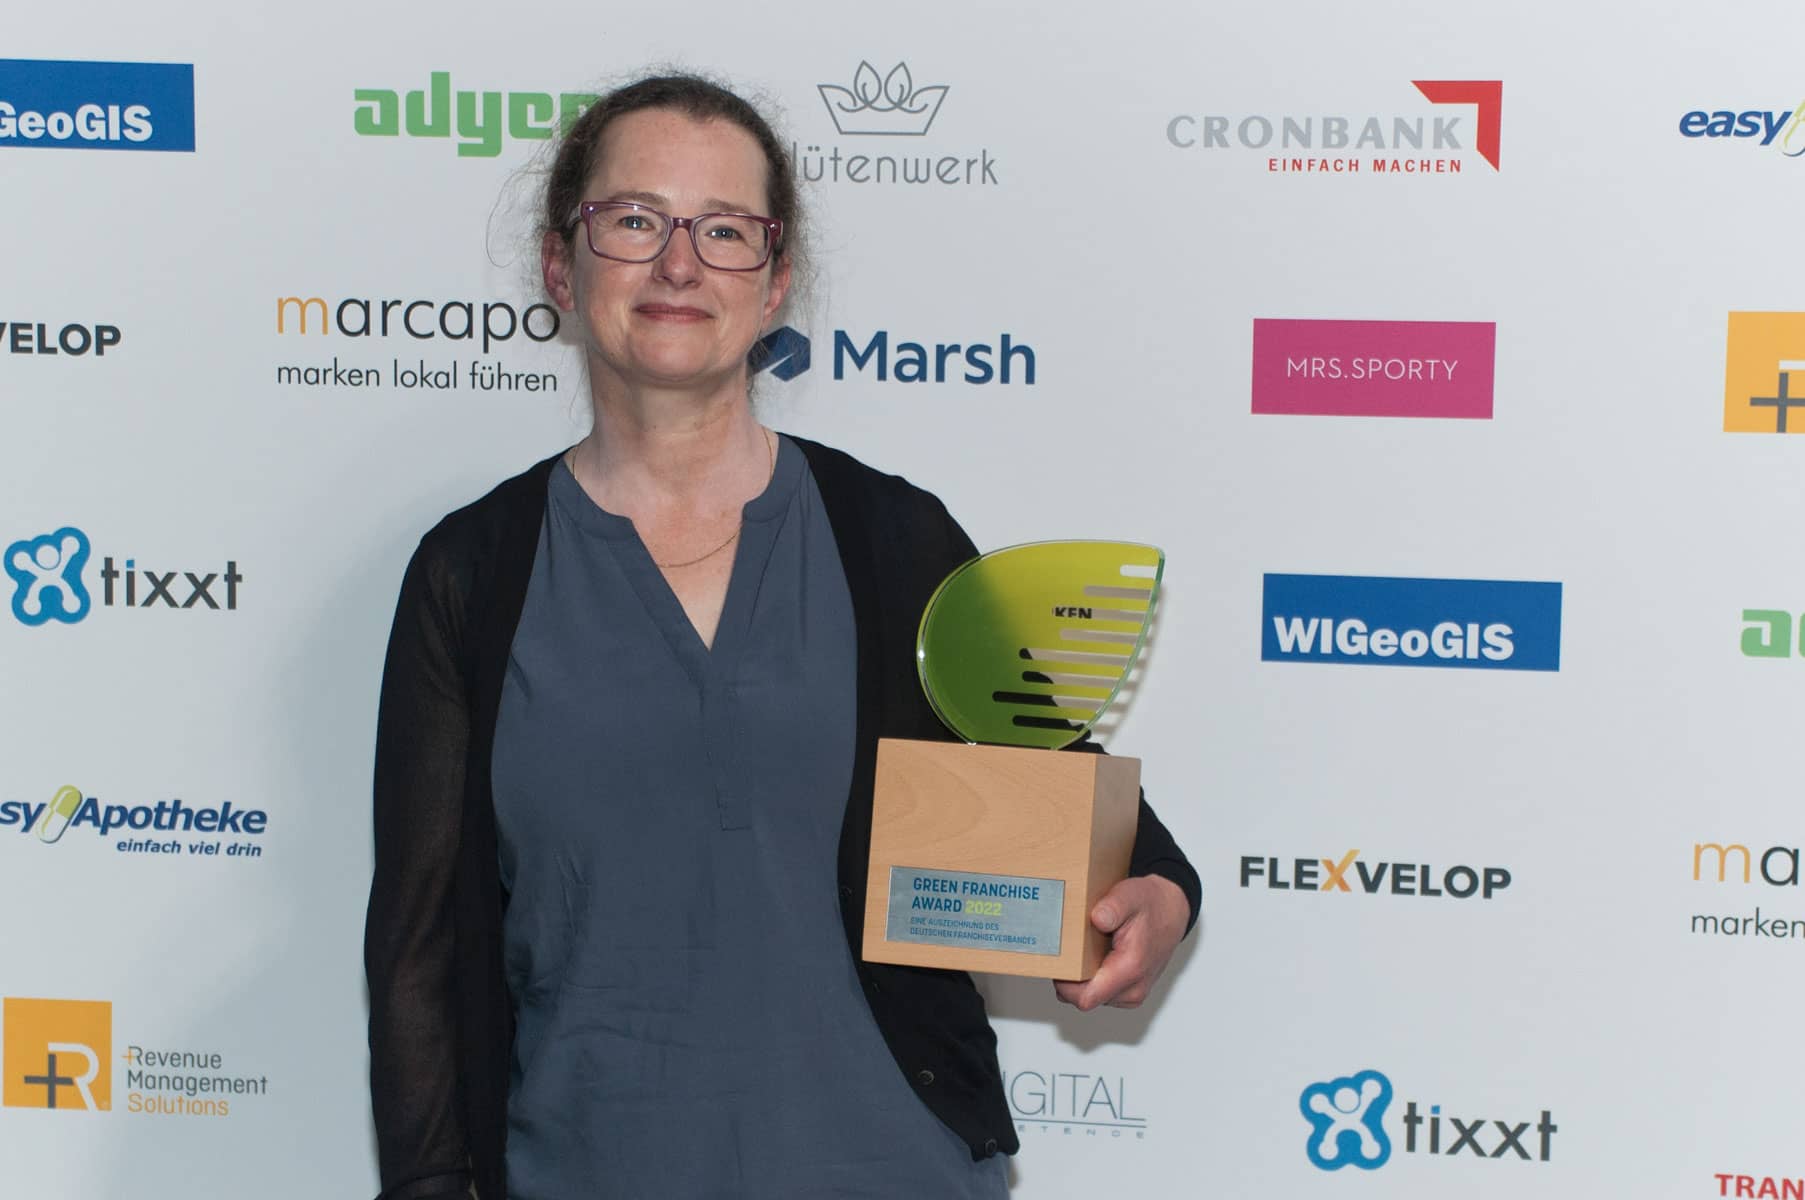 Filta receives Green Franchise Award 2022